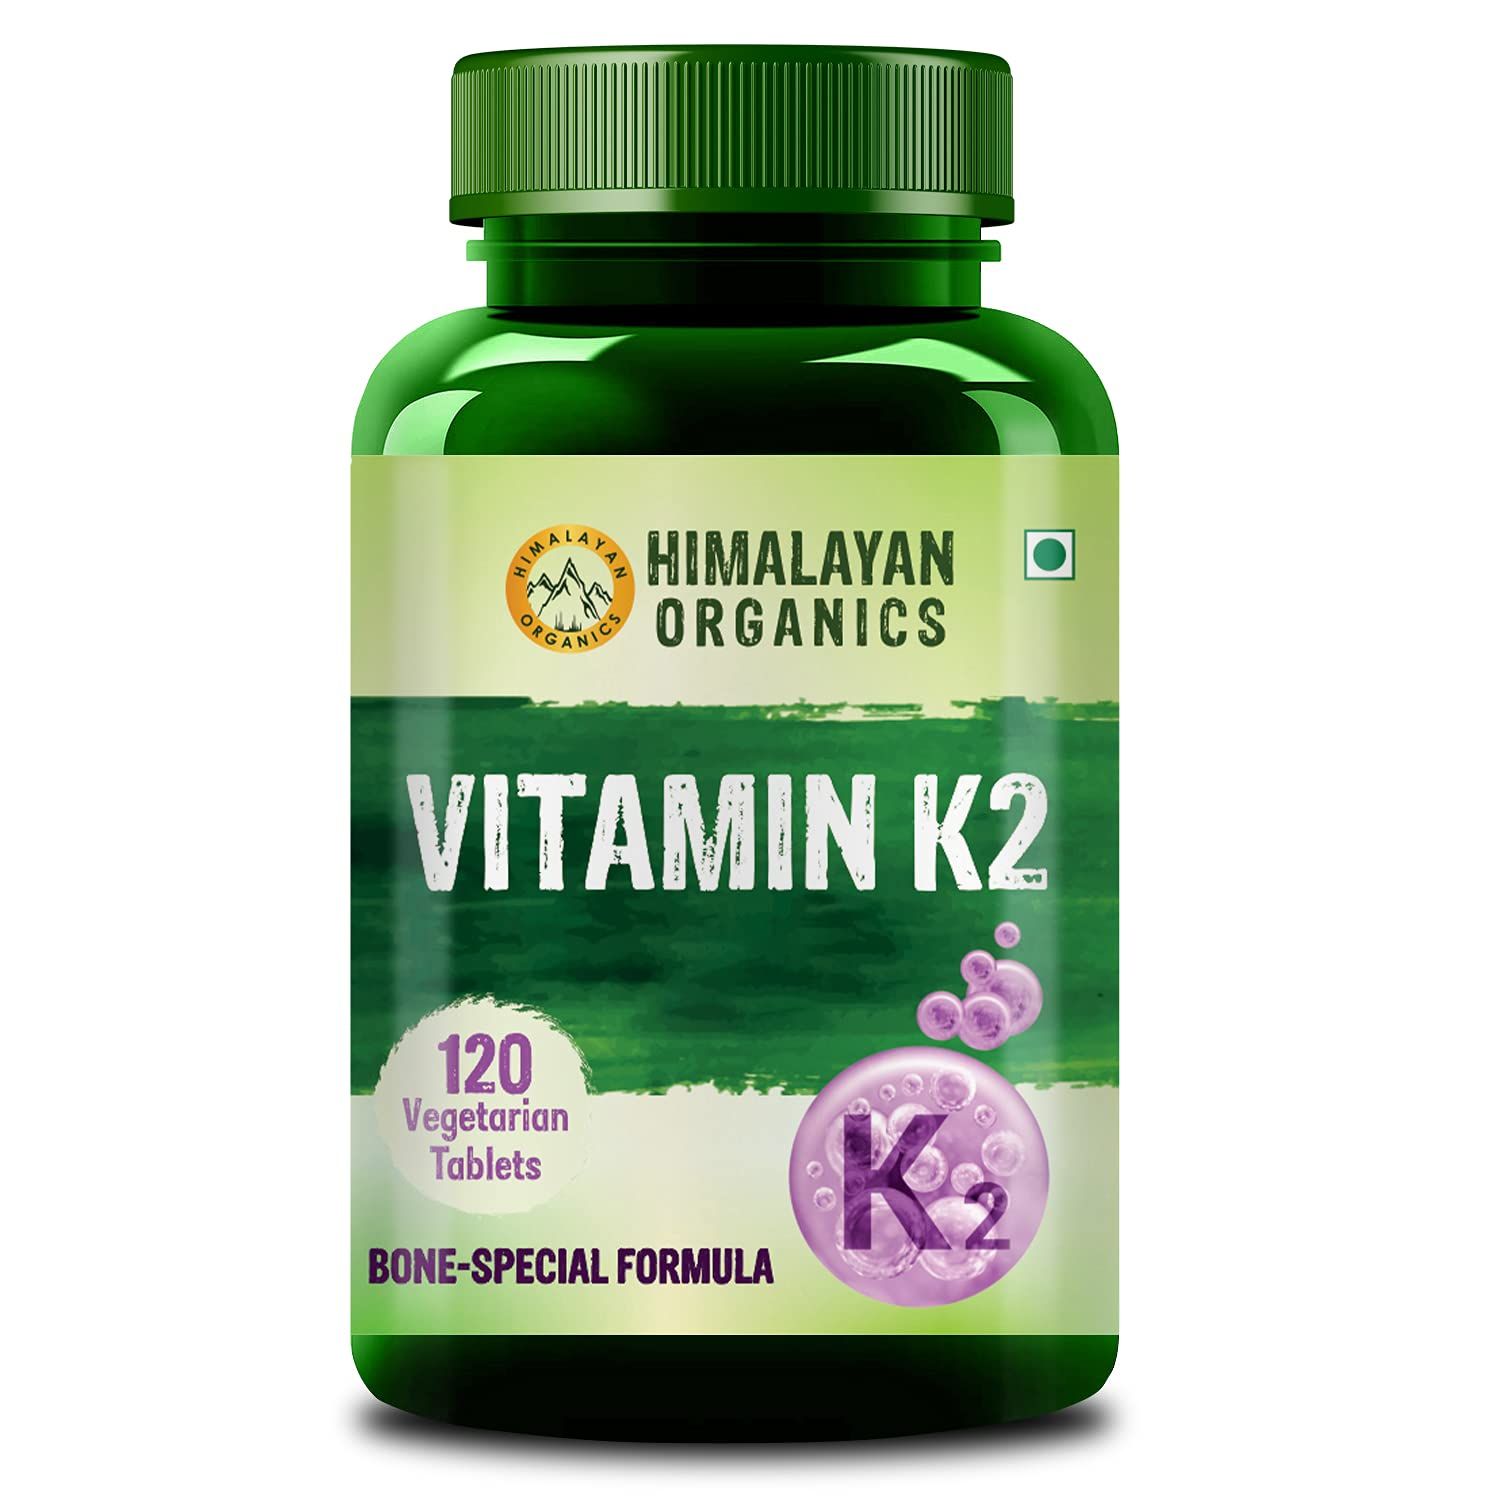 Himalayan Organics Vitamin K2 Tablets Image